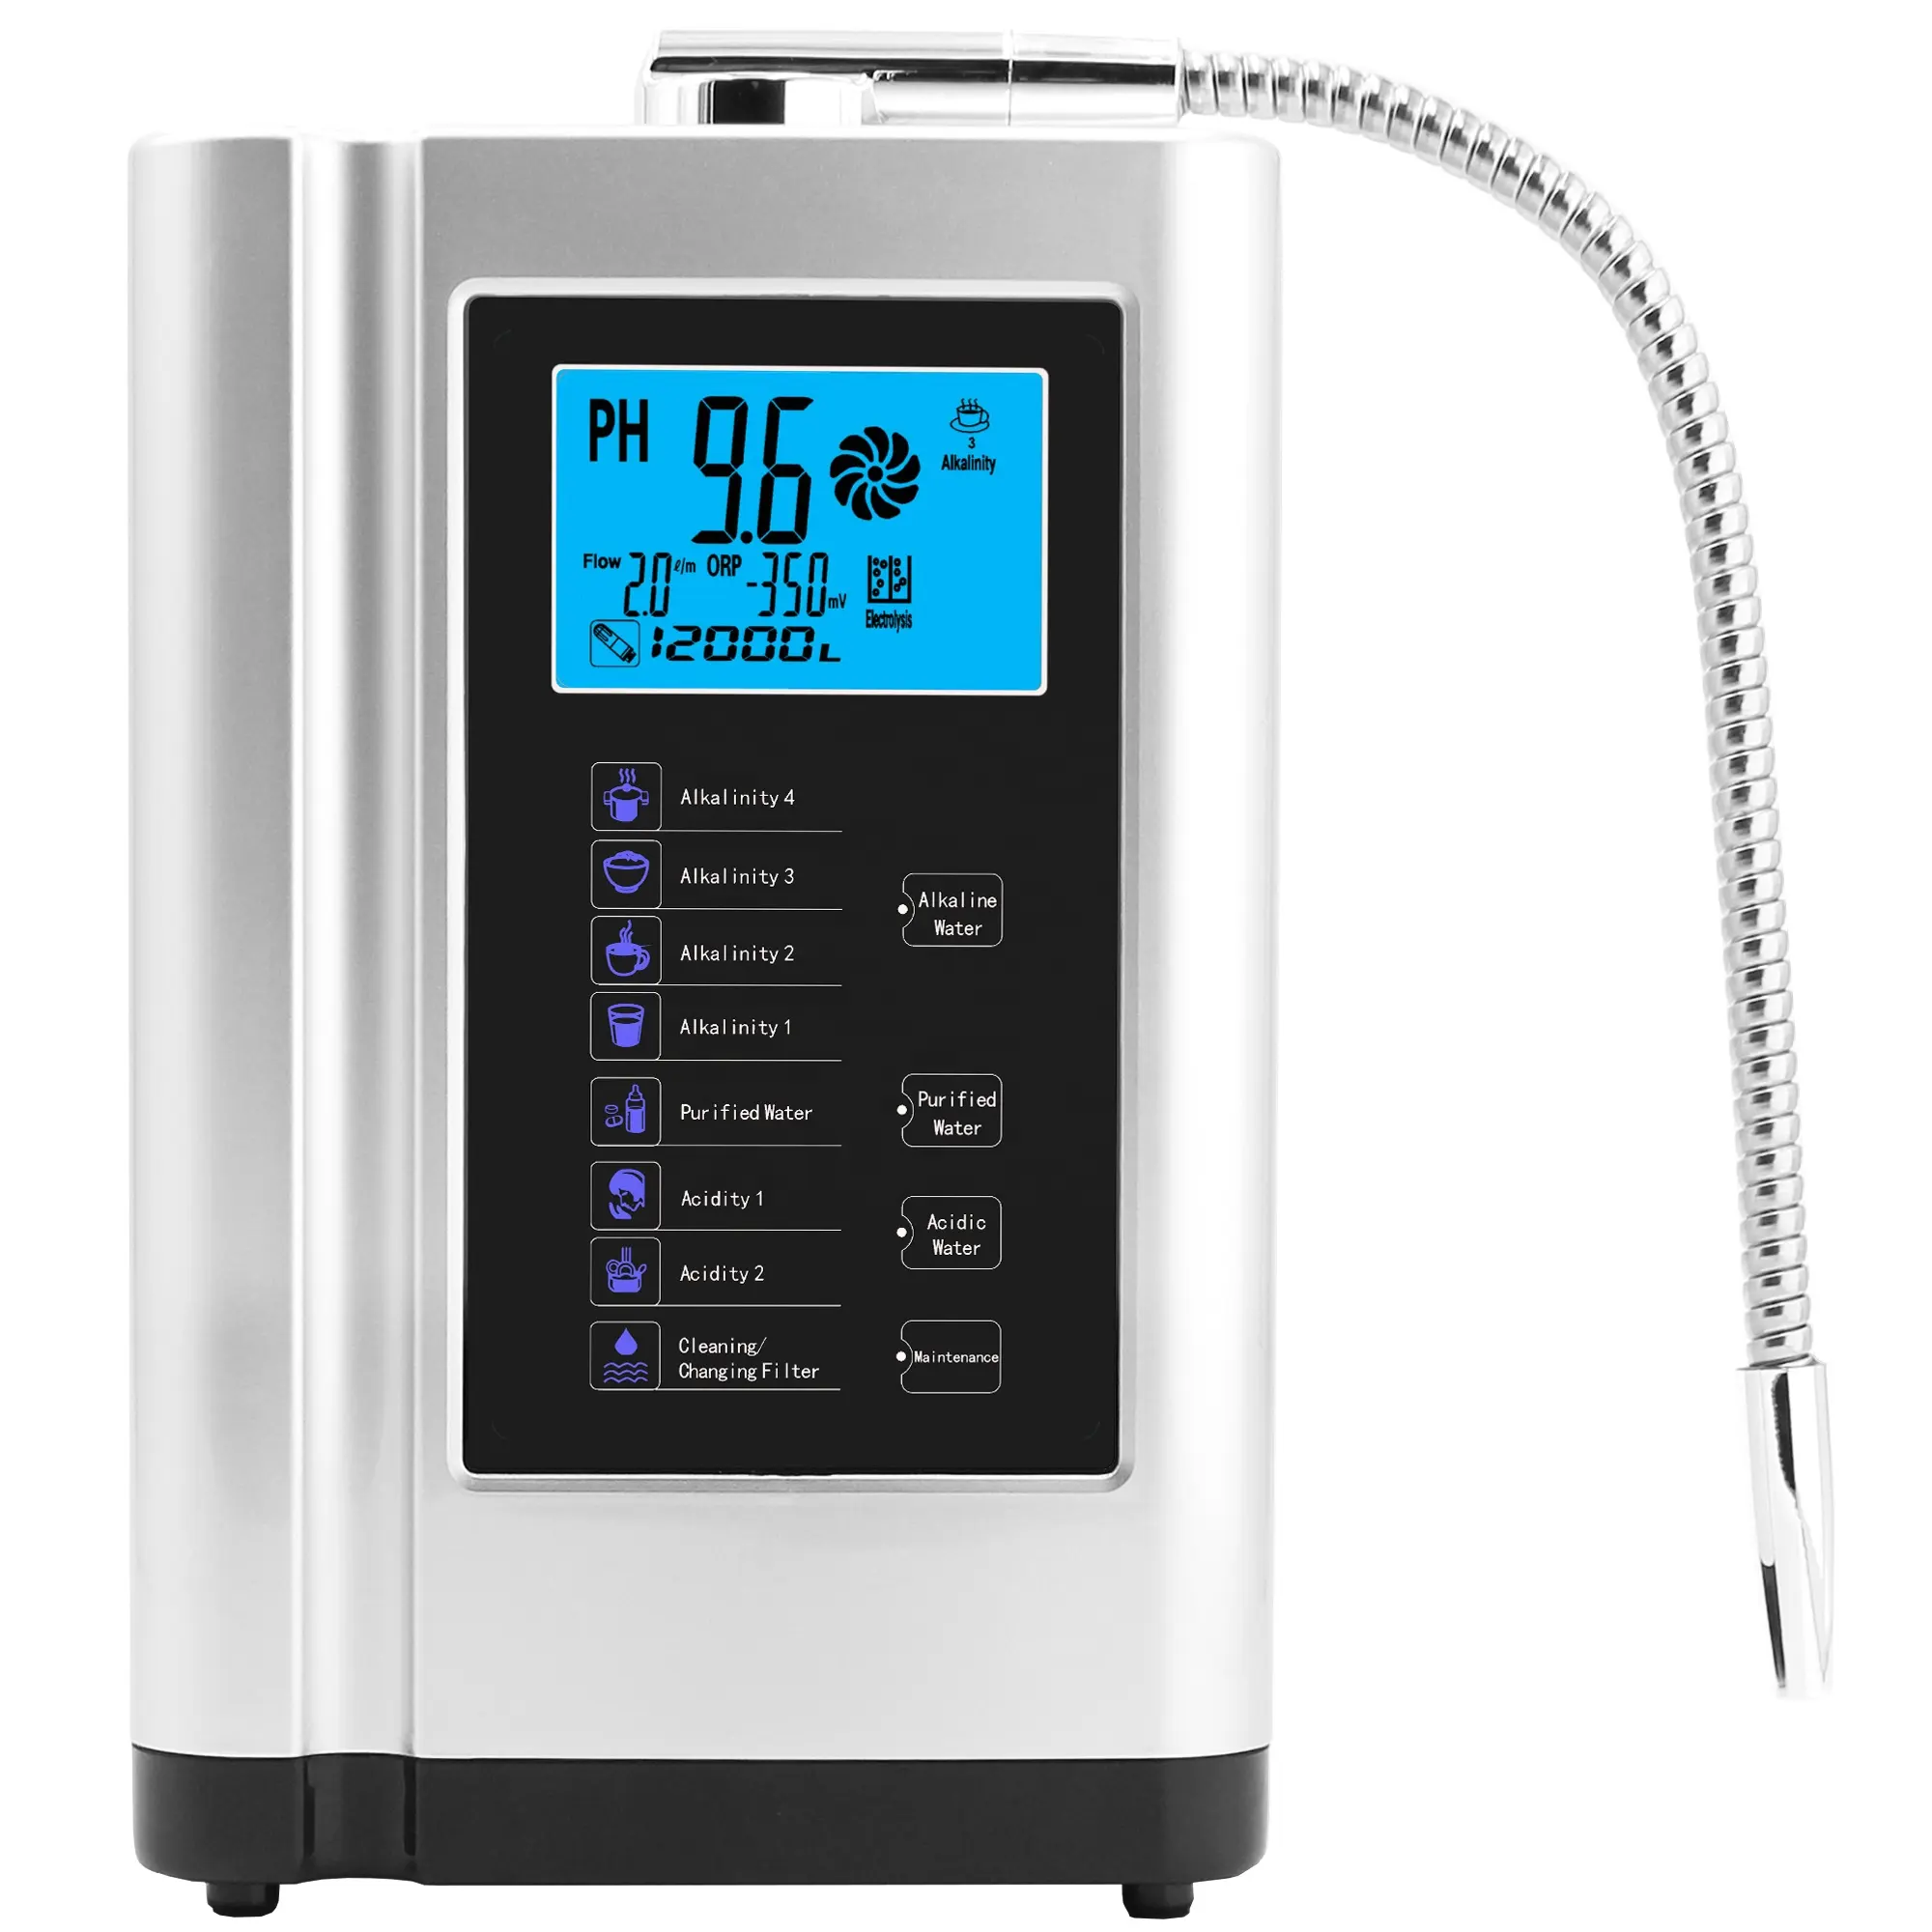 Ionizador de agua alcalina, máquina rica en hidrógeno de 5 Placas con alto valor de PH, purificador de filtro de agua alcalina japonesa